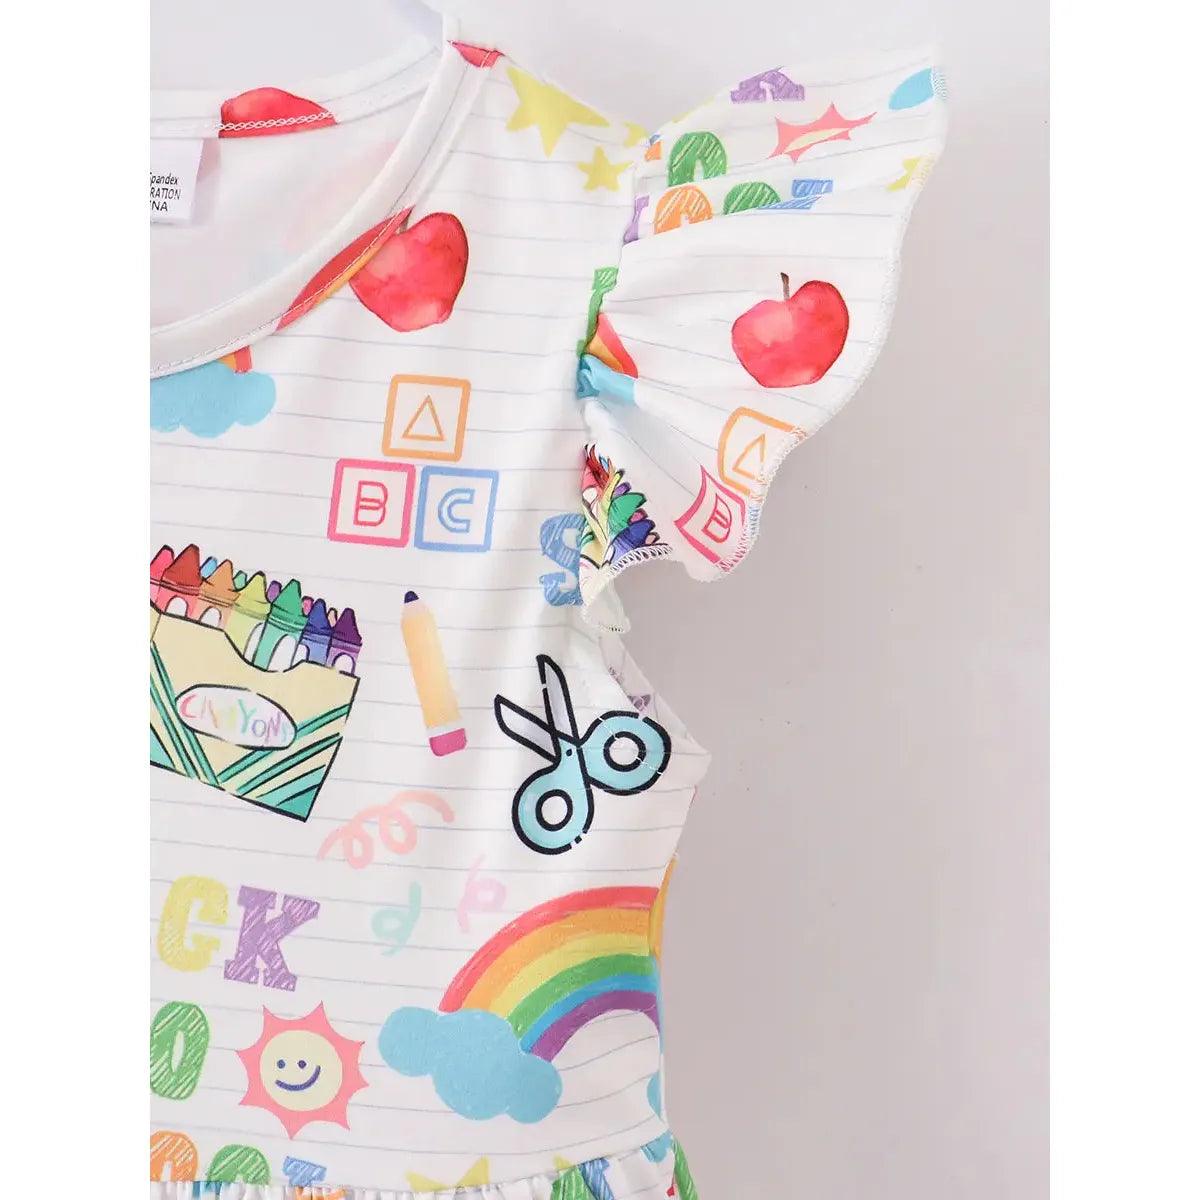 Girl's Back To School Rainbow ABC Twirl Dress - becauseofadi